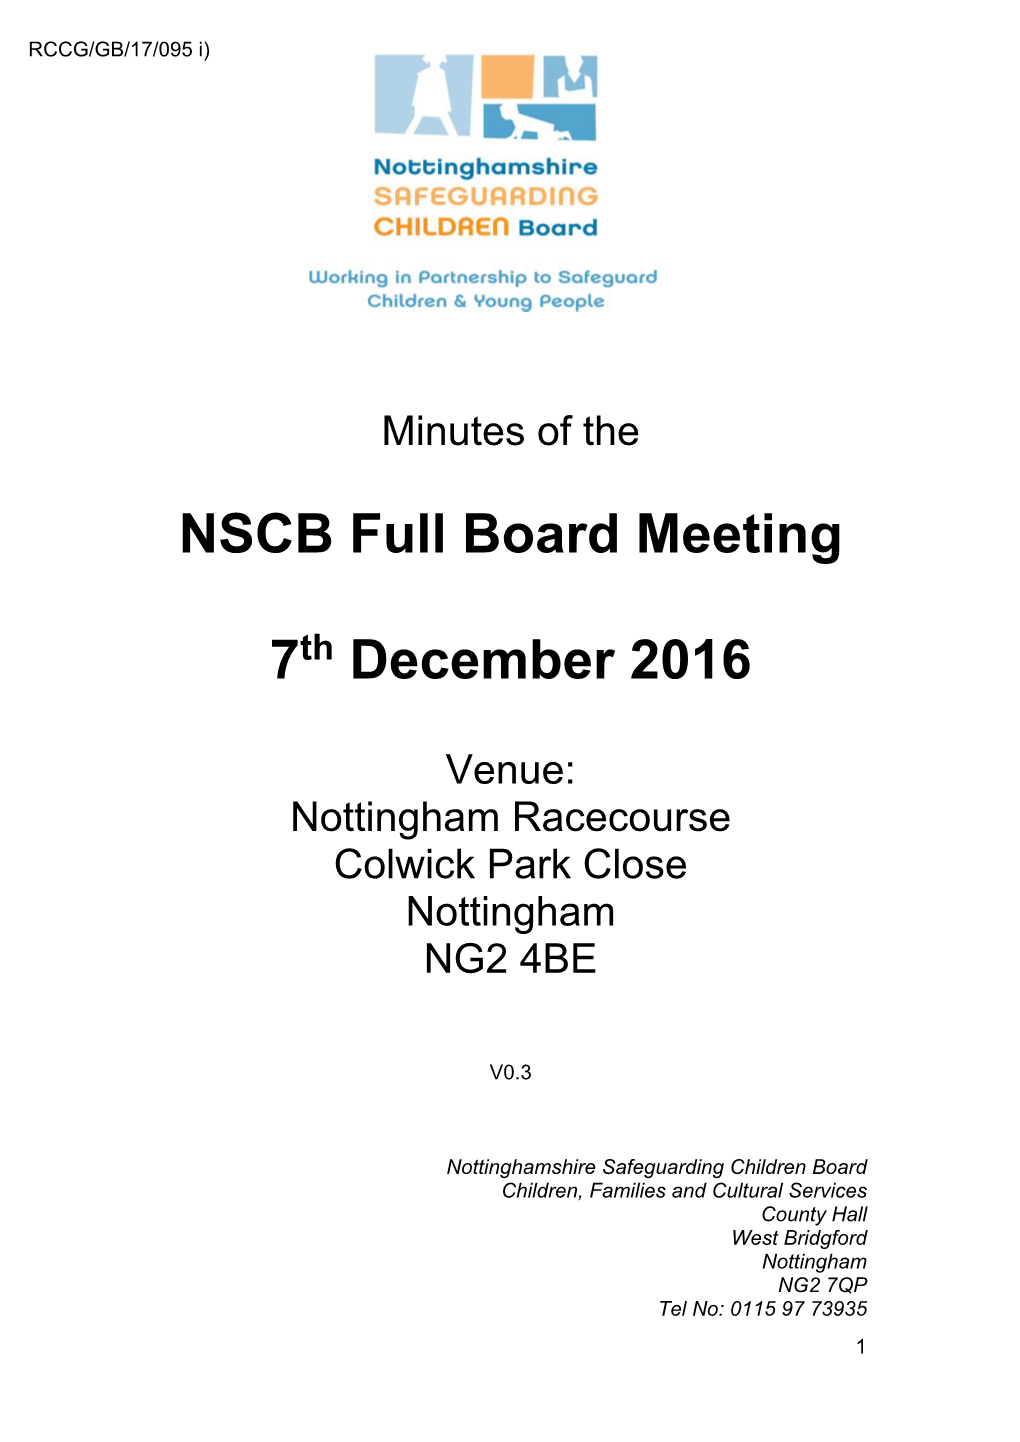 NSCB Full Board Meeting 7 December 2016